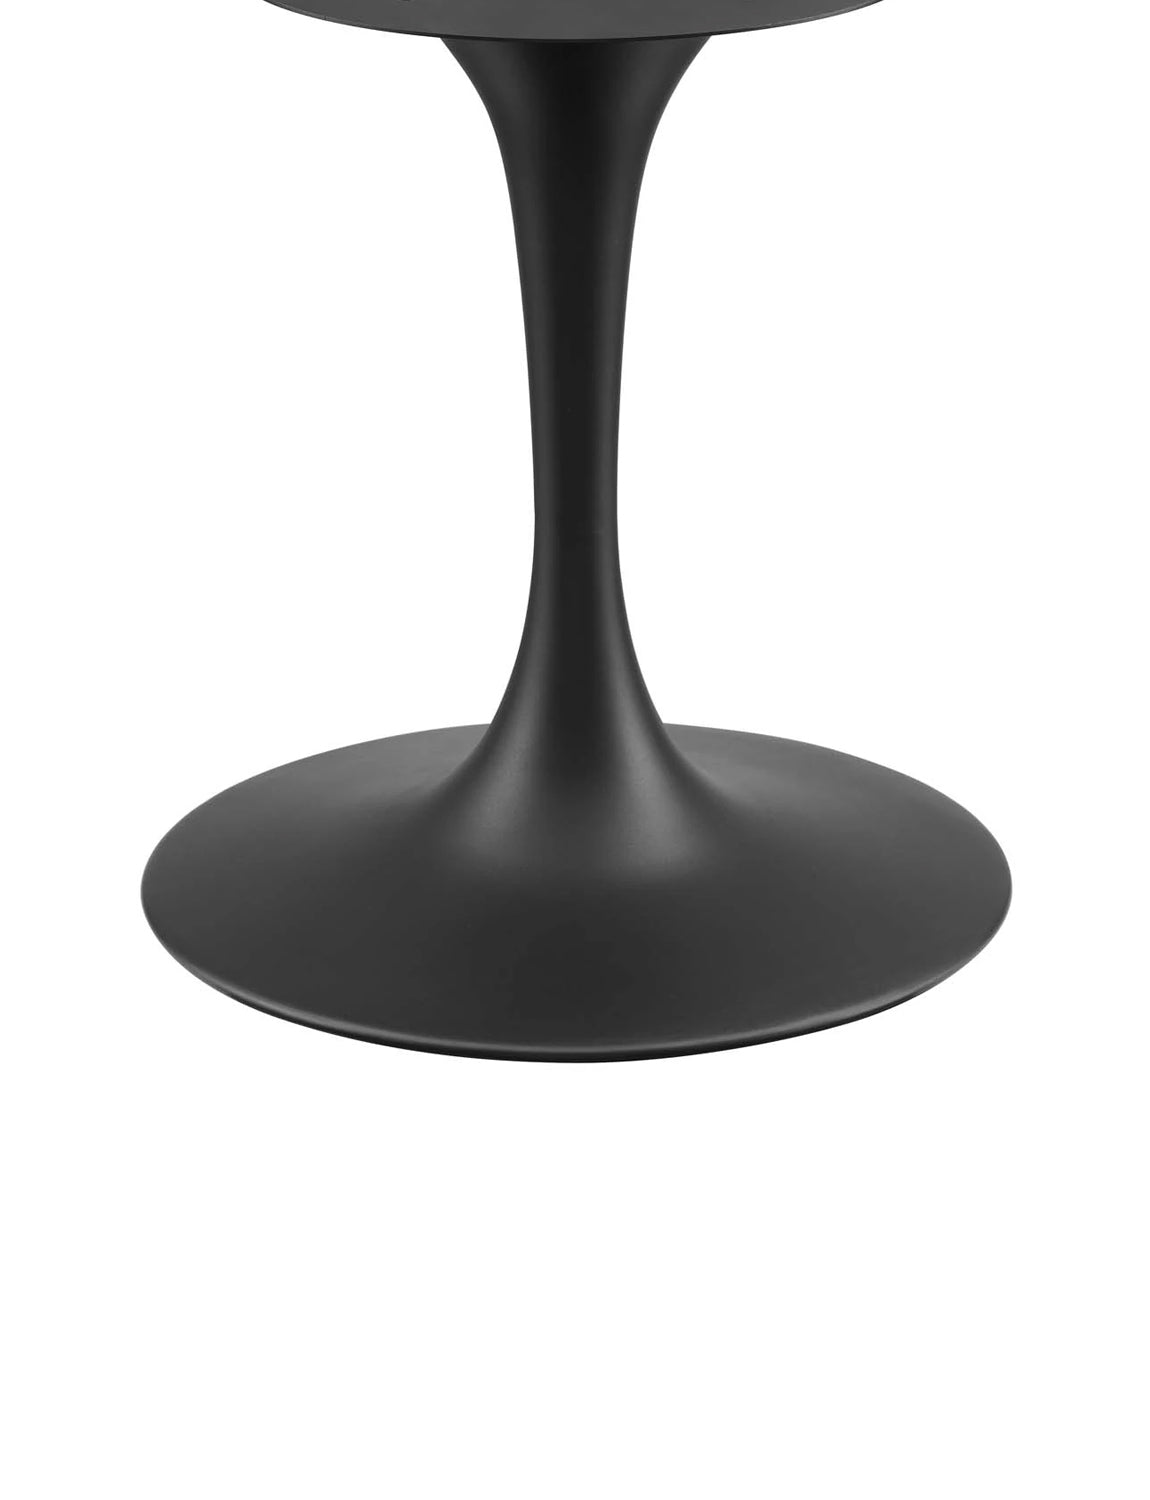 Lily Cherry Walnut Oval Dining Table, black base